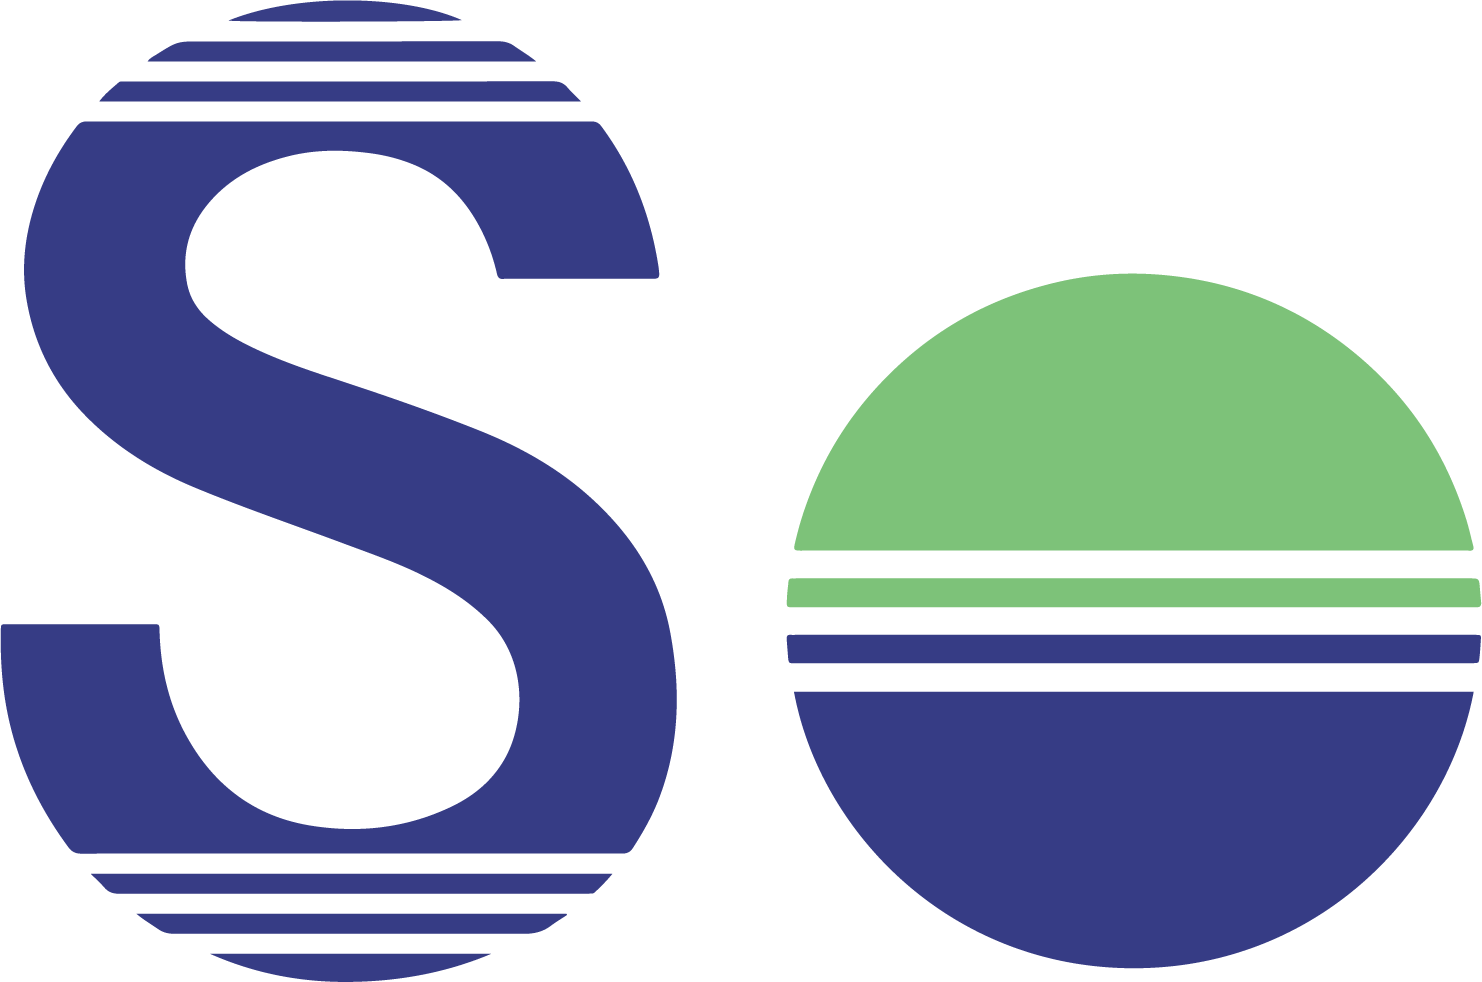 Subros logo (transparent PNG)